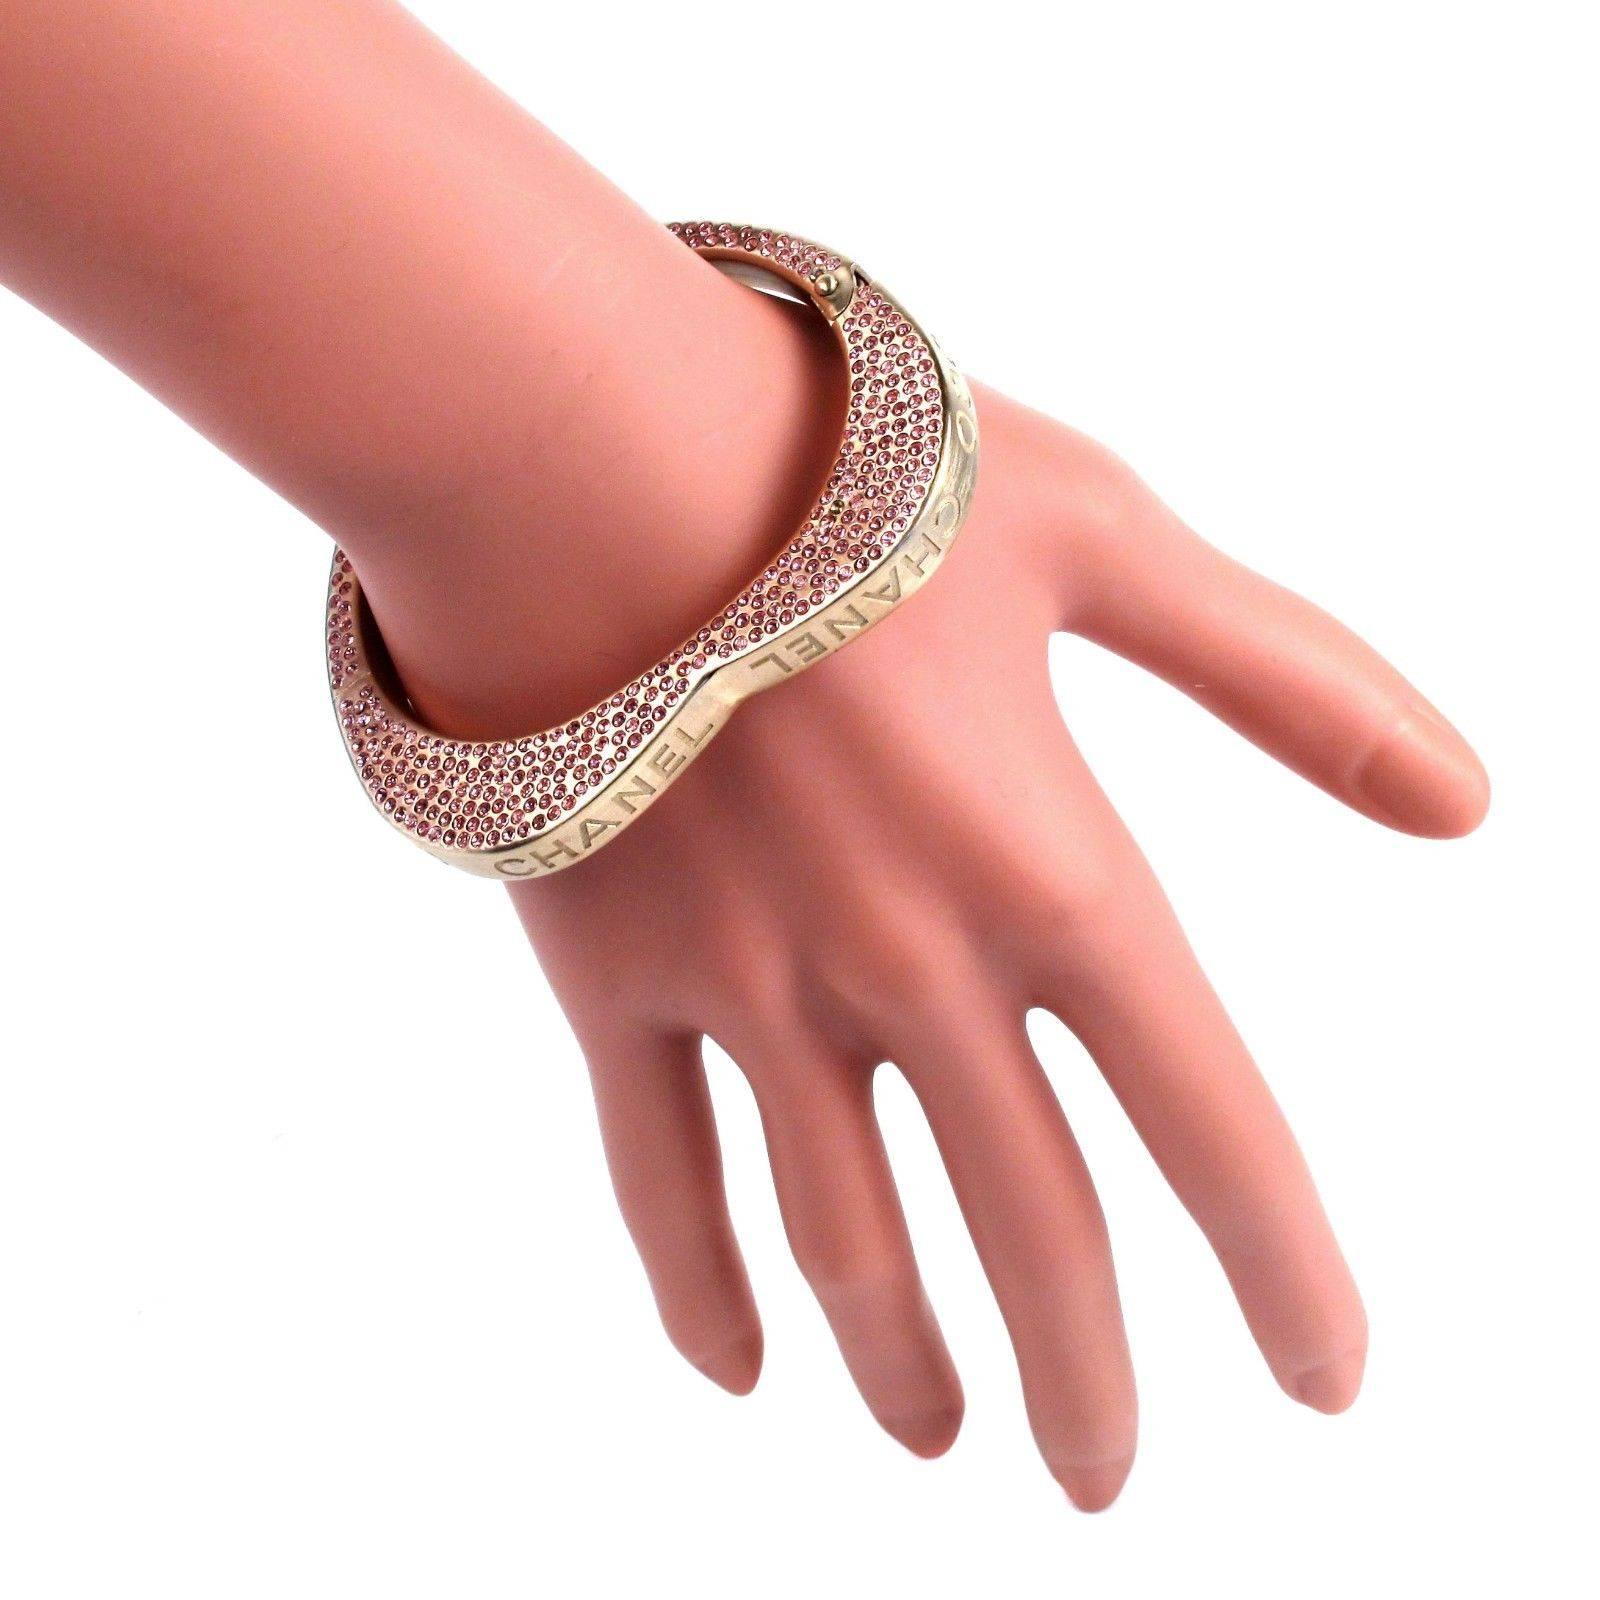 Chanel - Crystal Heart Bracelet

Color: Pink / Gold

------------------------------------------------------------
 
Details:

- rare collectors item

- pink crystal embellishments throughout 

- spring closure

- gold tone metal 

-